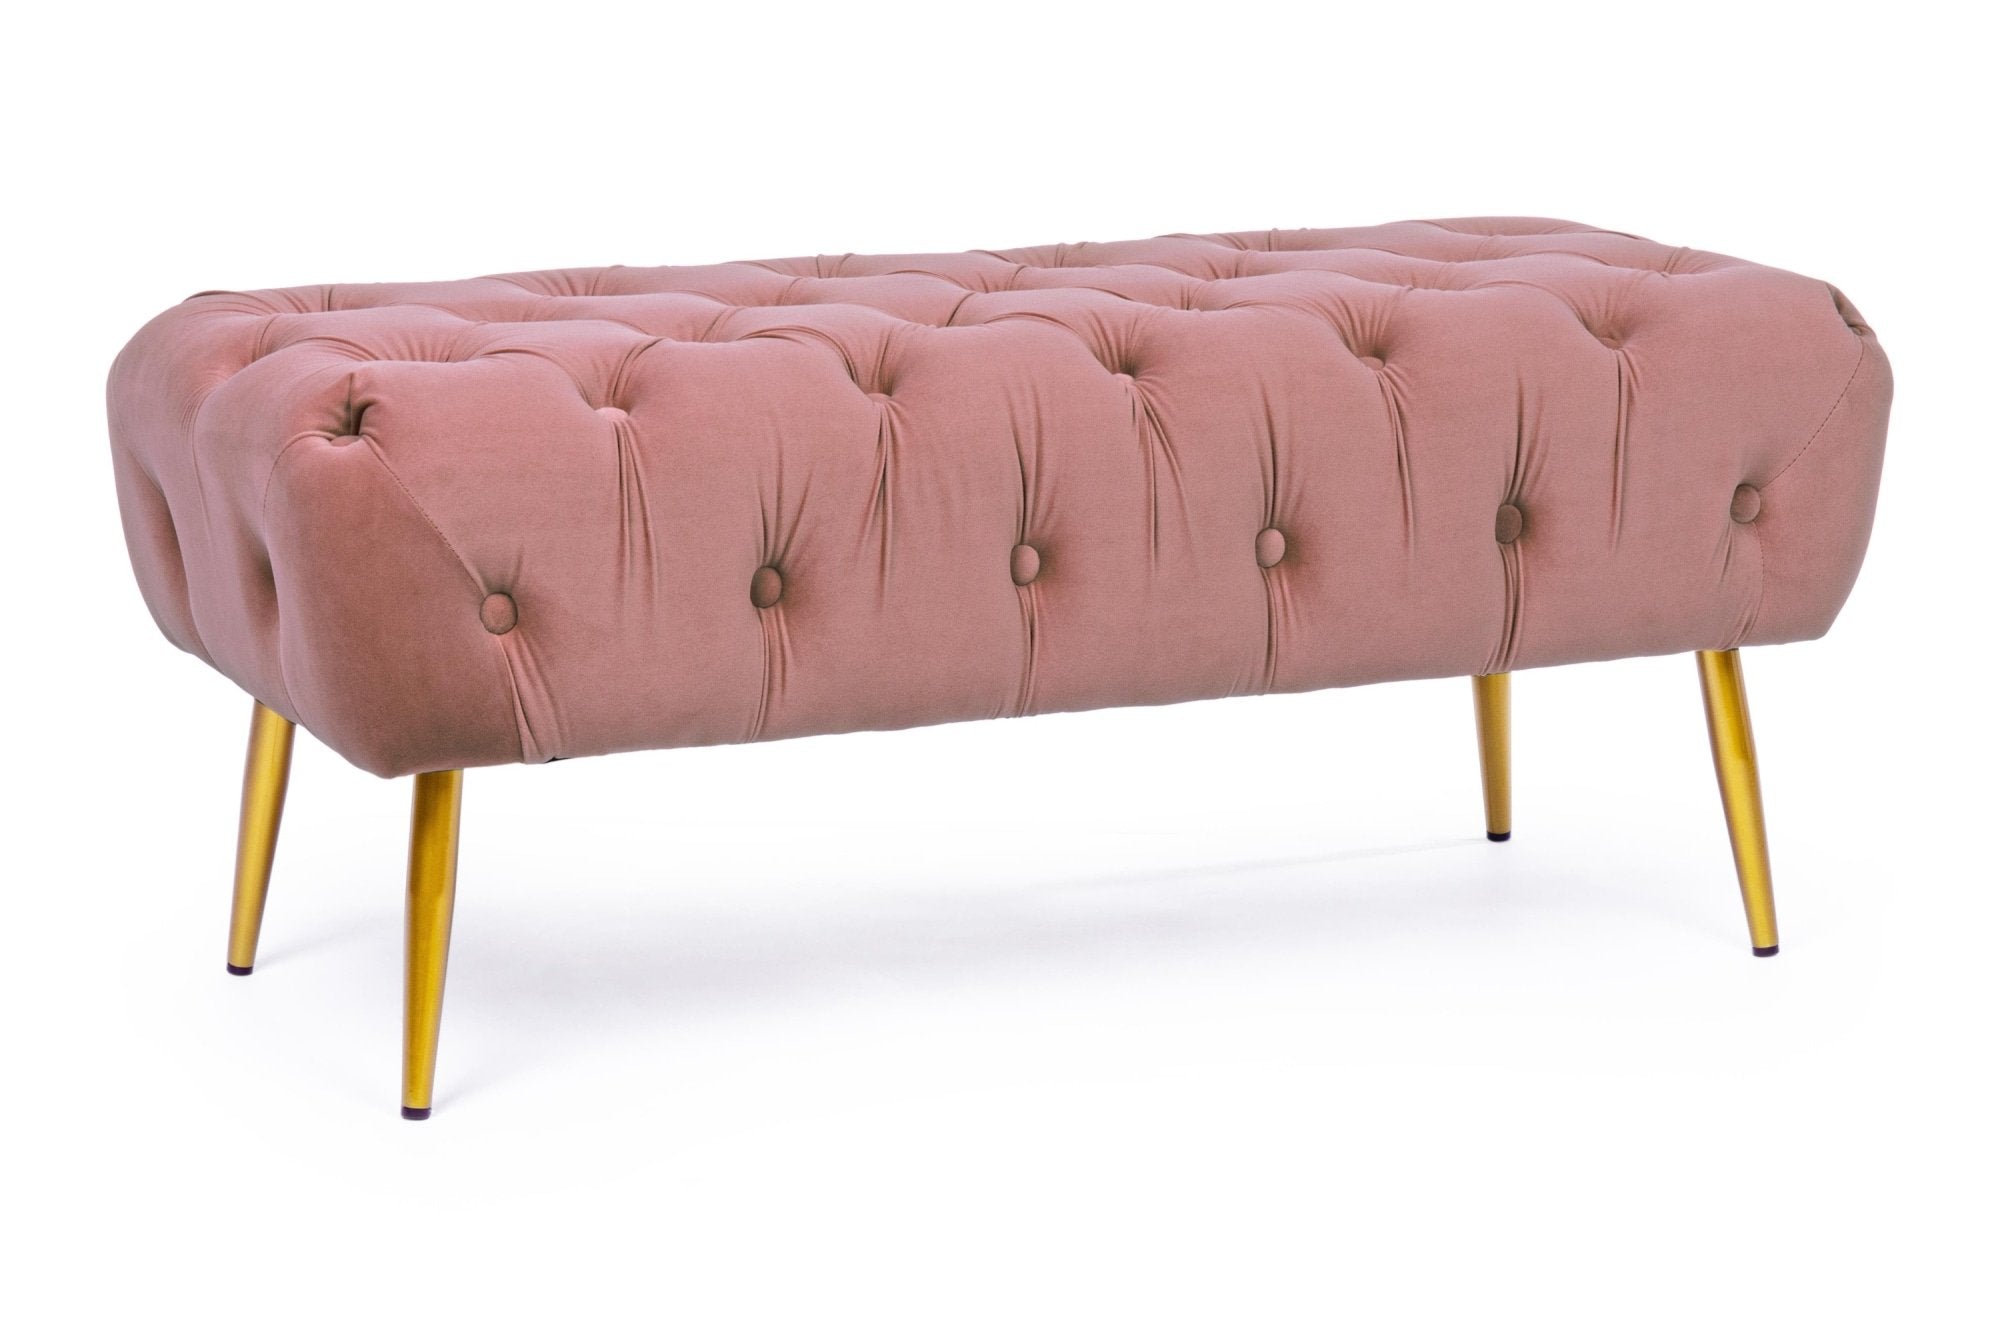 Ülőpad - GIACINTA rózsaszín ülőpad